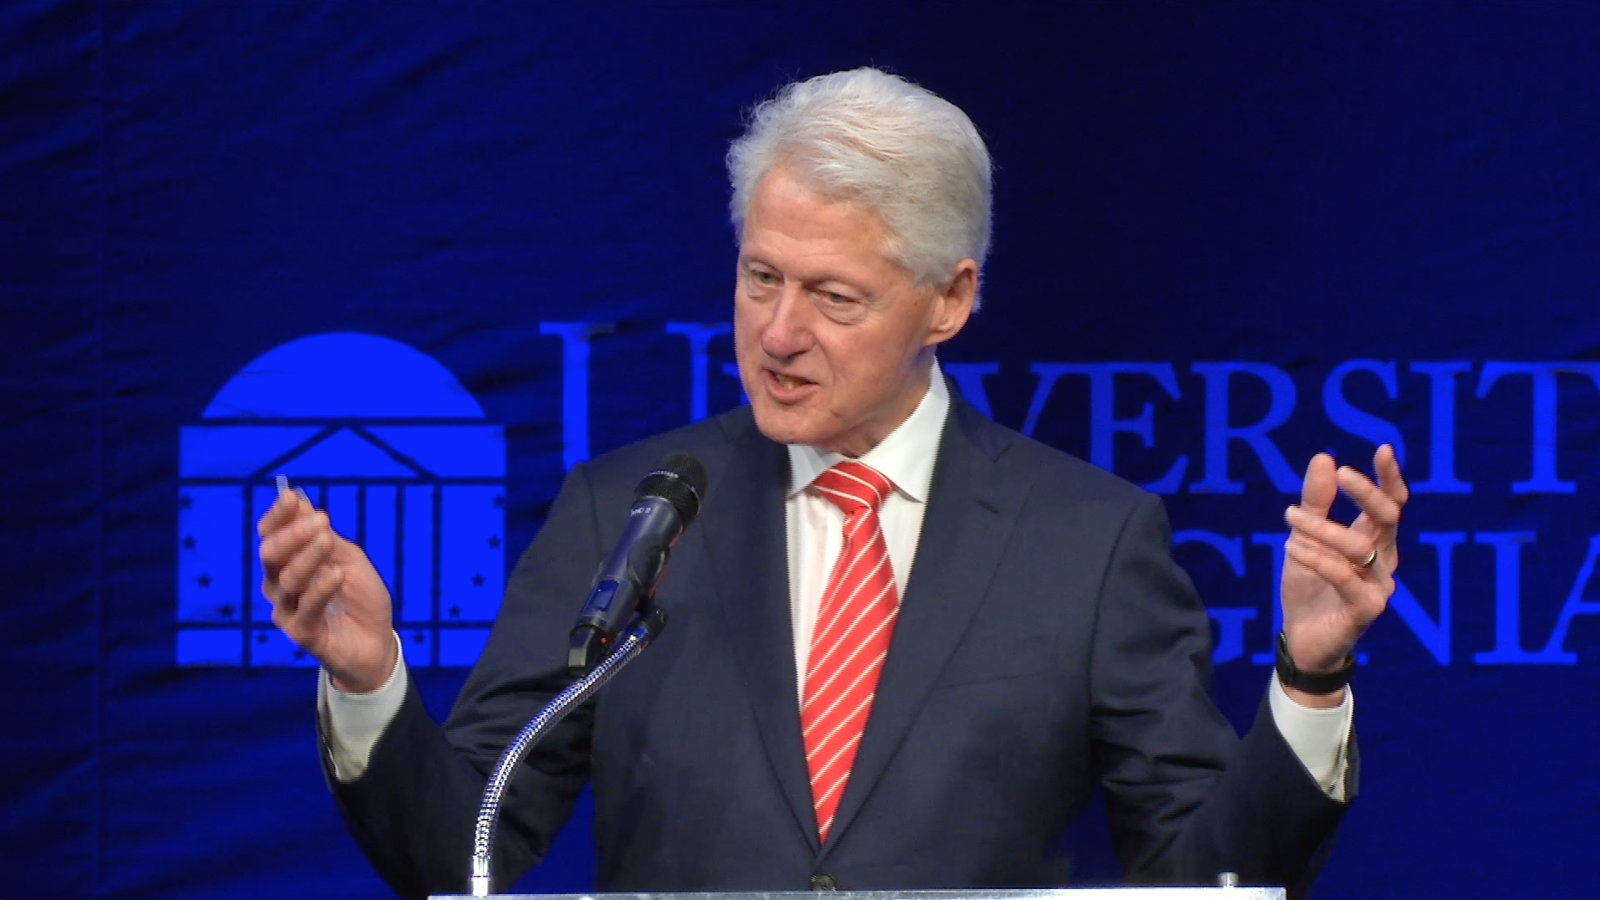 President Clinton Gesturing